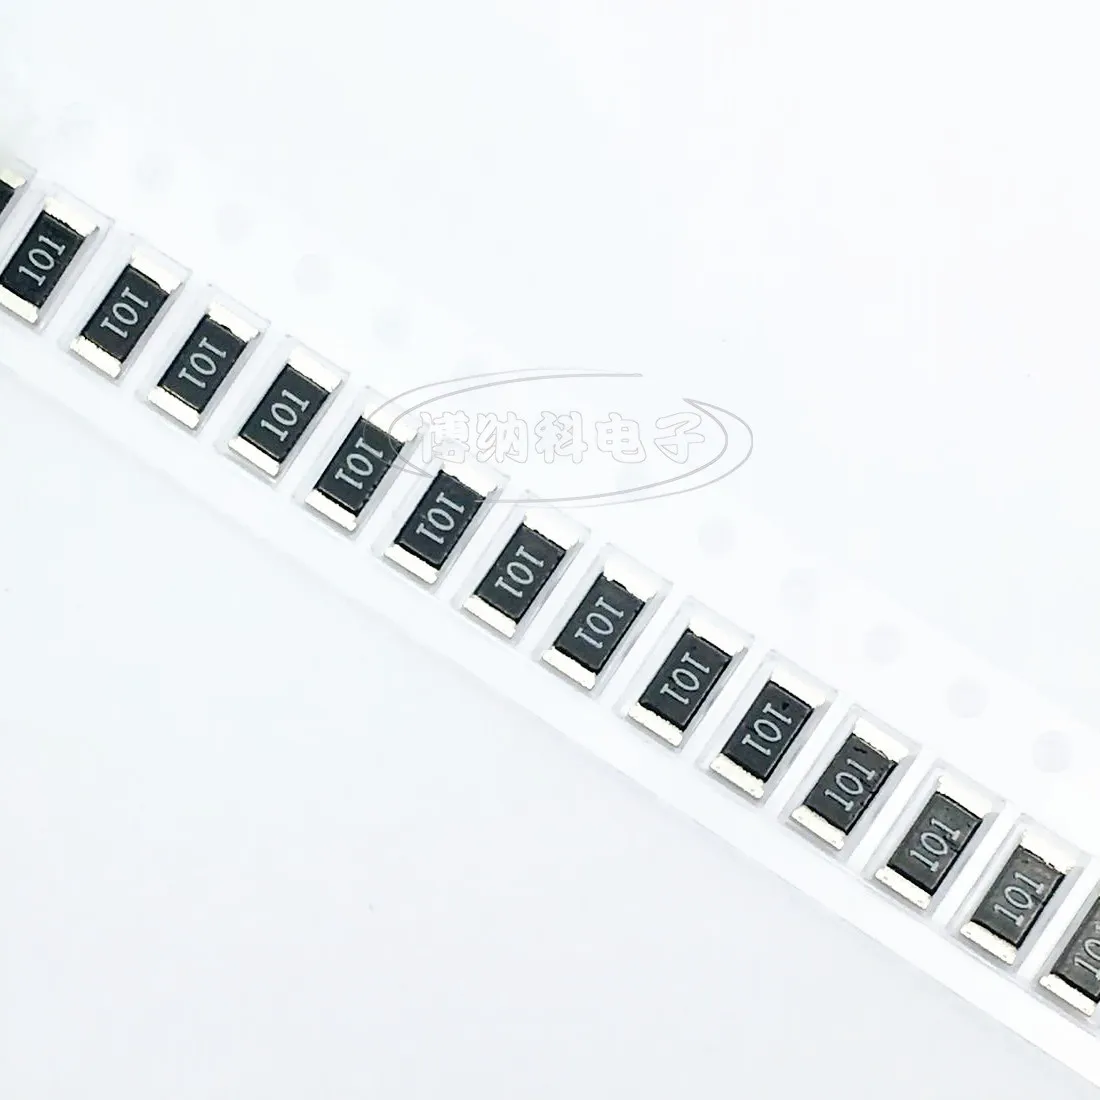 4000pcs 2010 5% 3/4W SMD Chip Resistor resistors 0R - 10M 0 0.1 0.5 100 220 ohm 0.1R 0.5R 100R 220R 1K 2.2K 4.7K 10K 100K 1M 10M